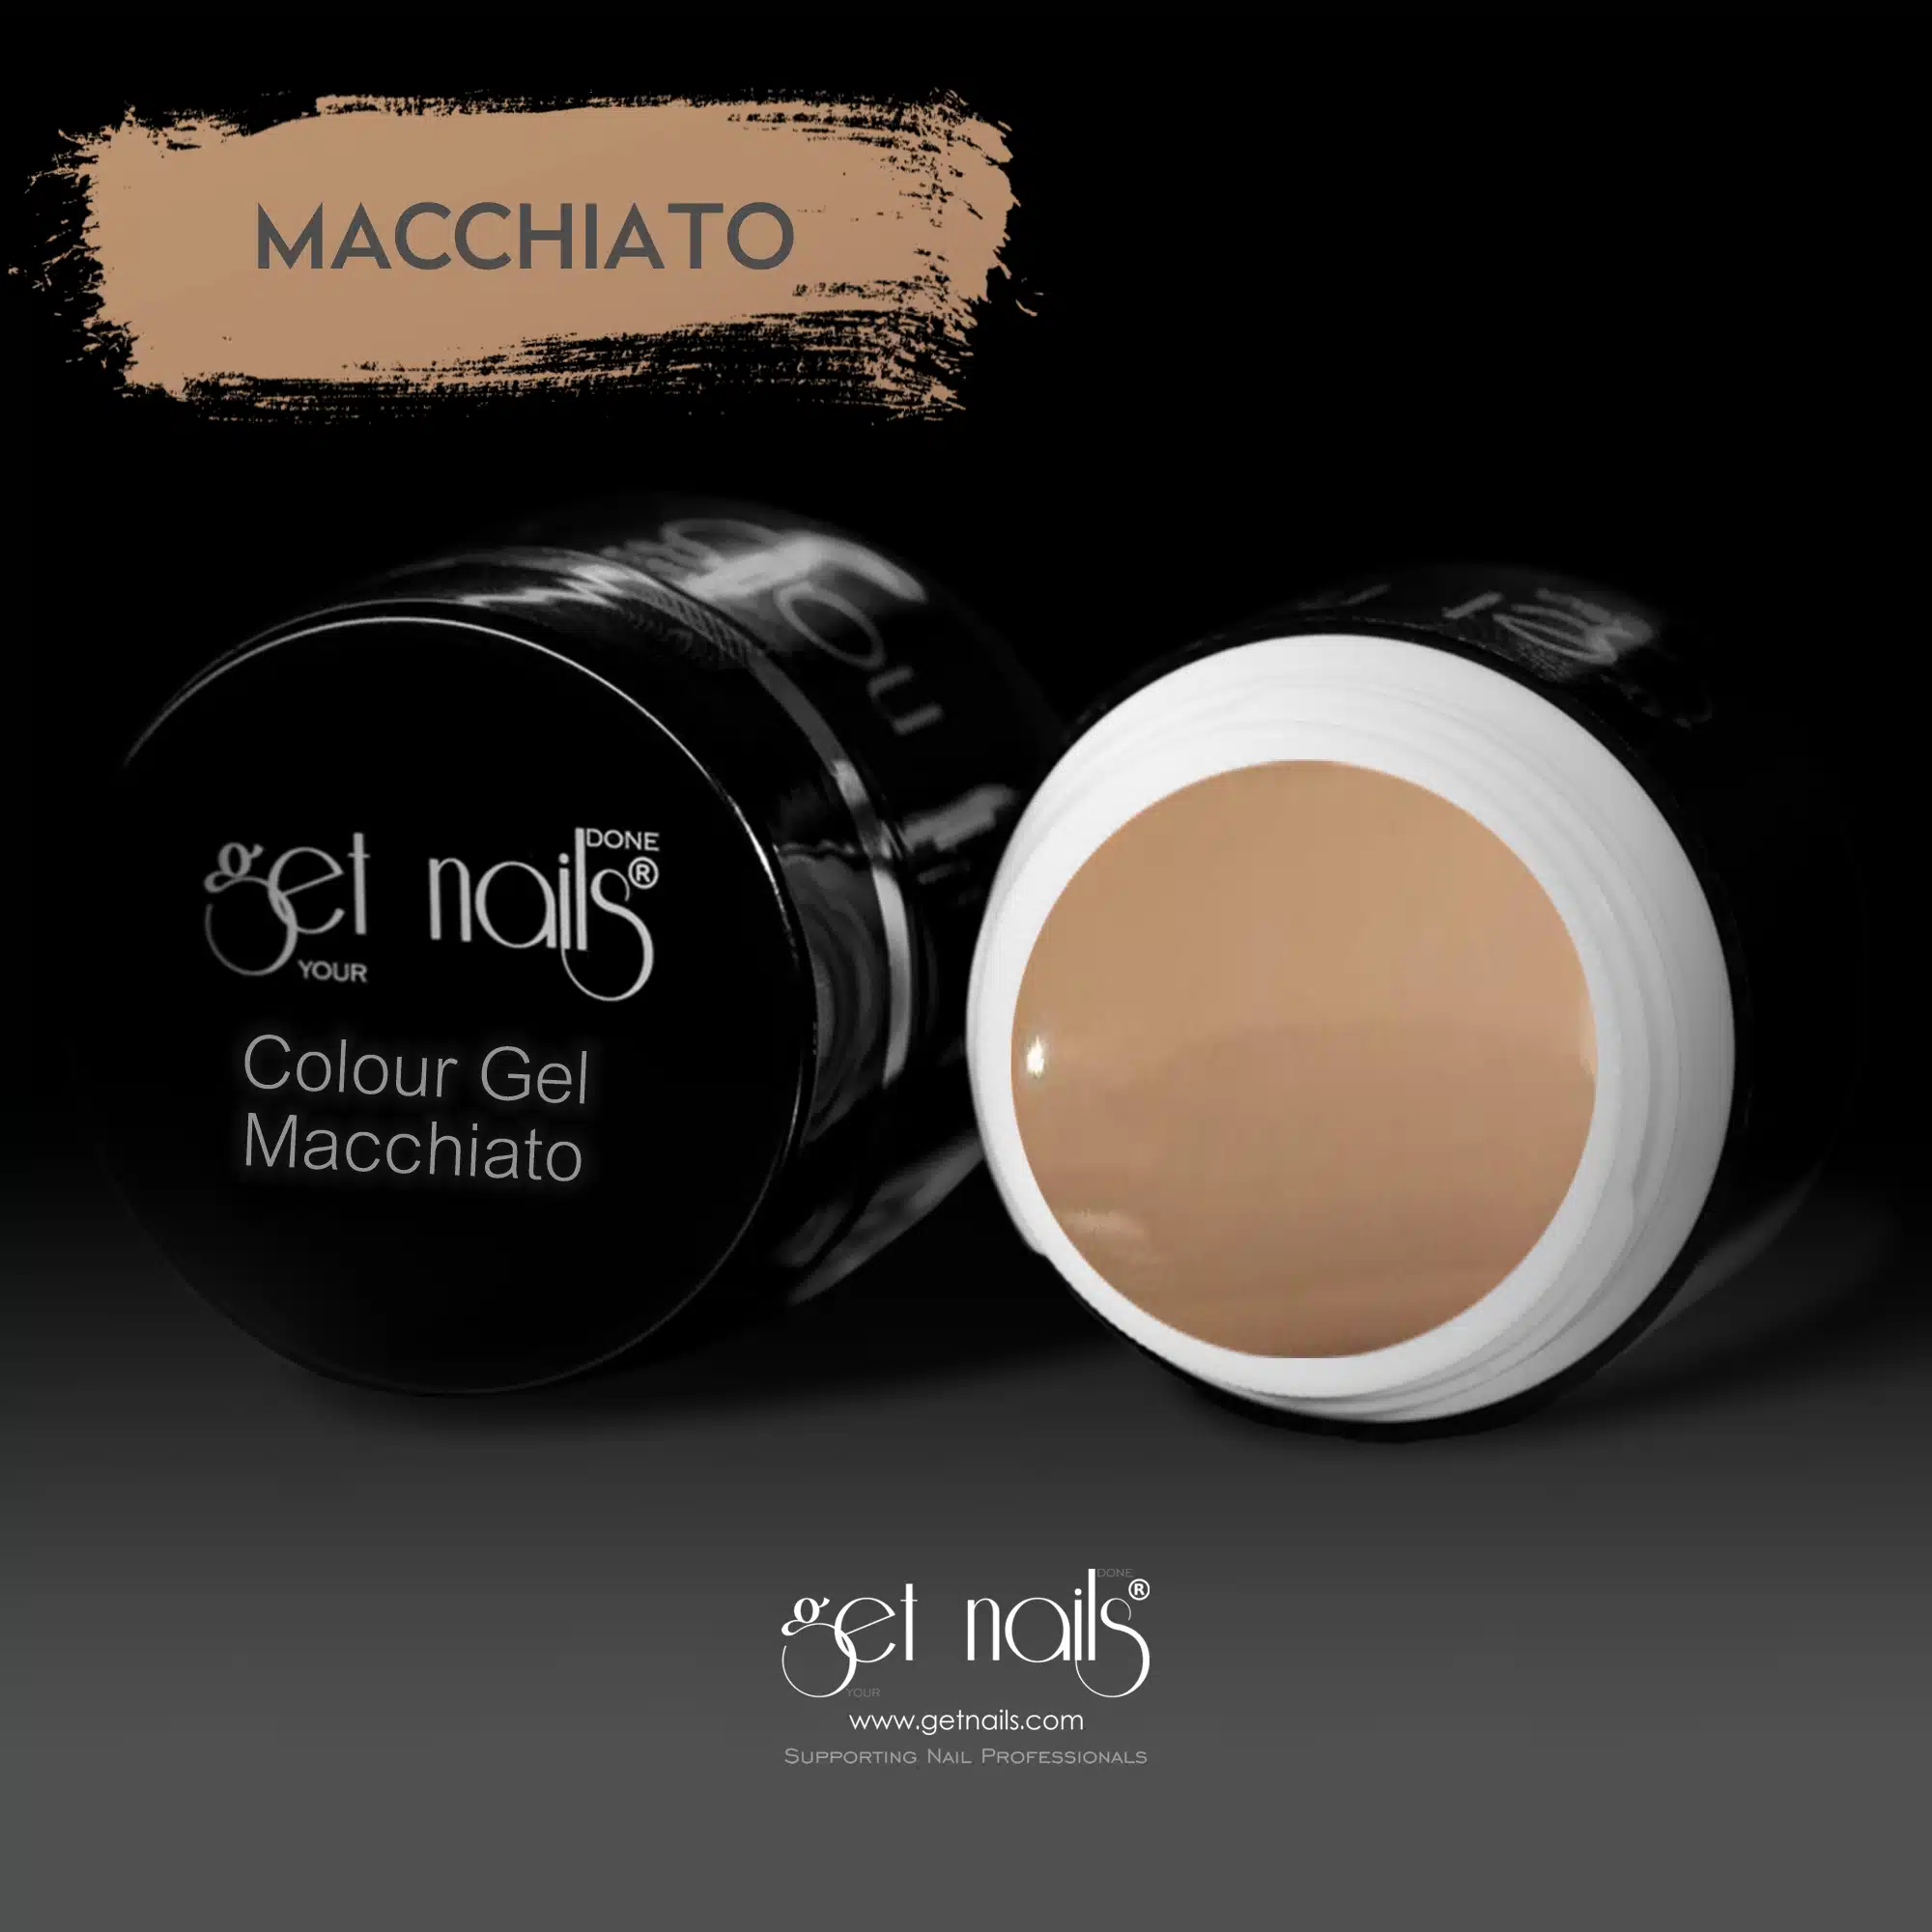 Get Nails Austria - Colour Gel Macchiato 5g